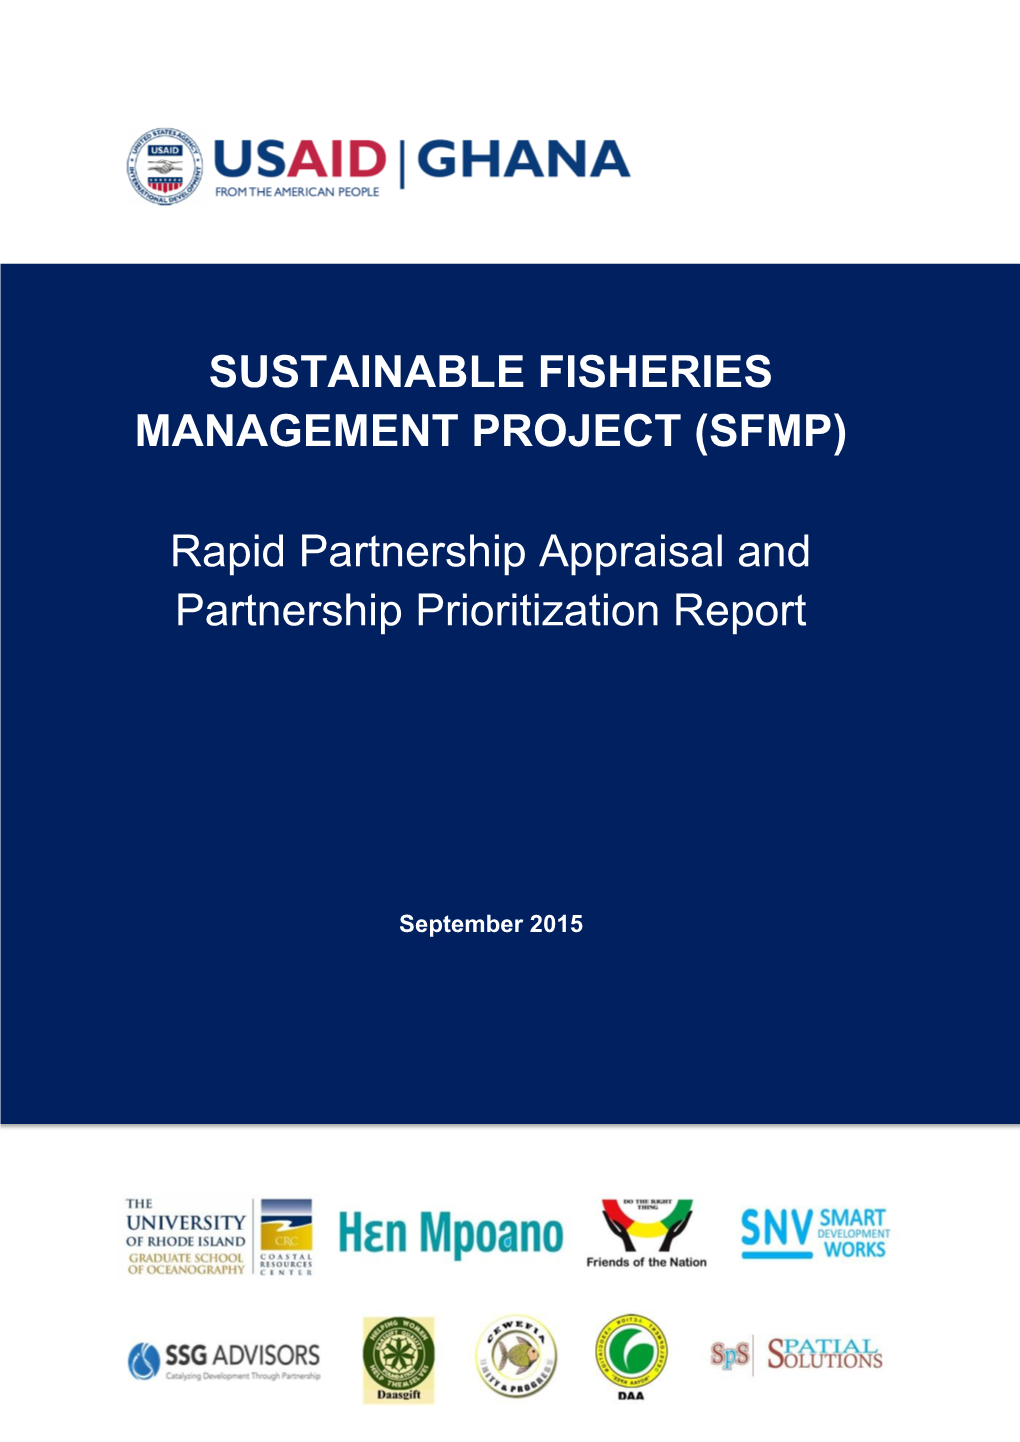 Rapid Partnership Appraisal and Partnership Prioritization Report